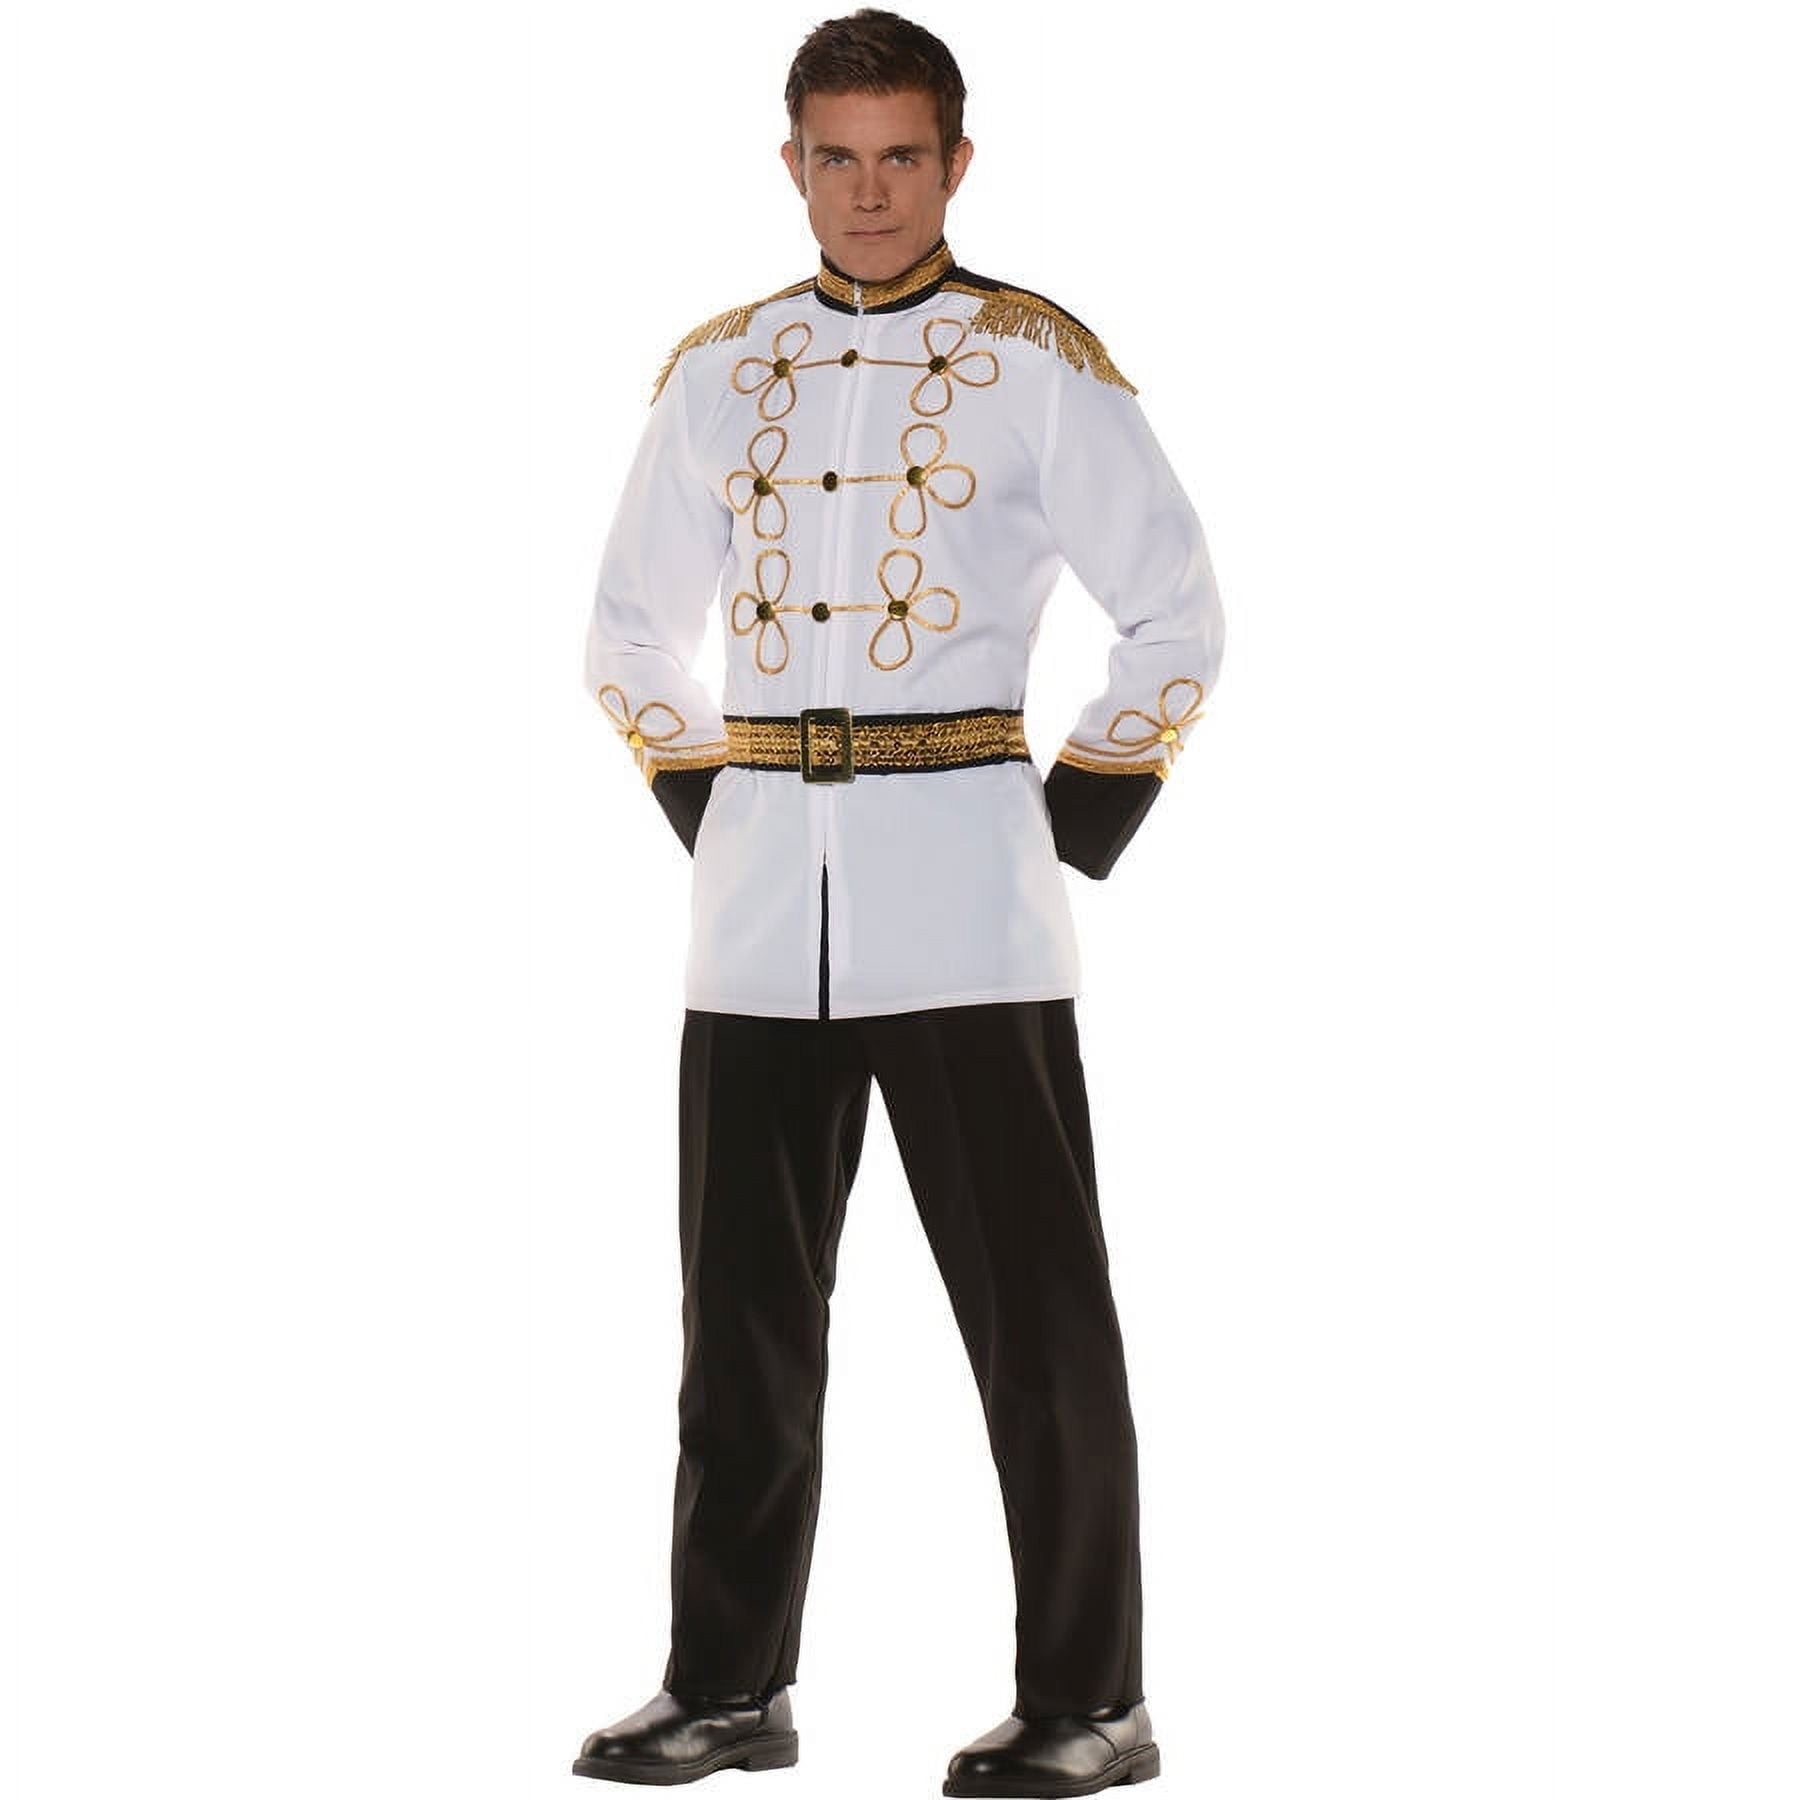 Prince Charming Men's Adult Halloween Costume - Walmart.com